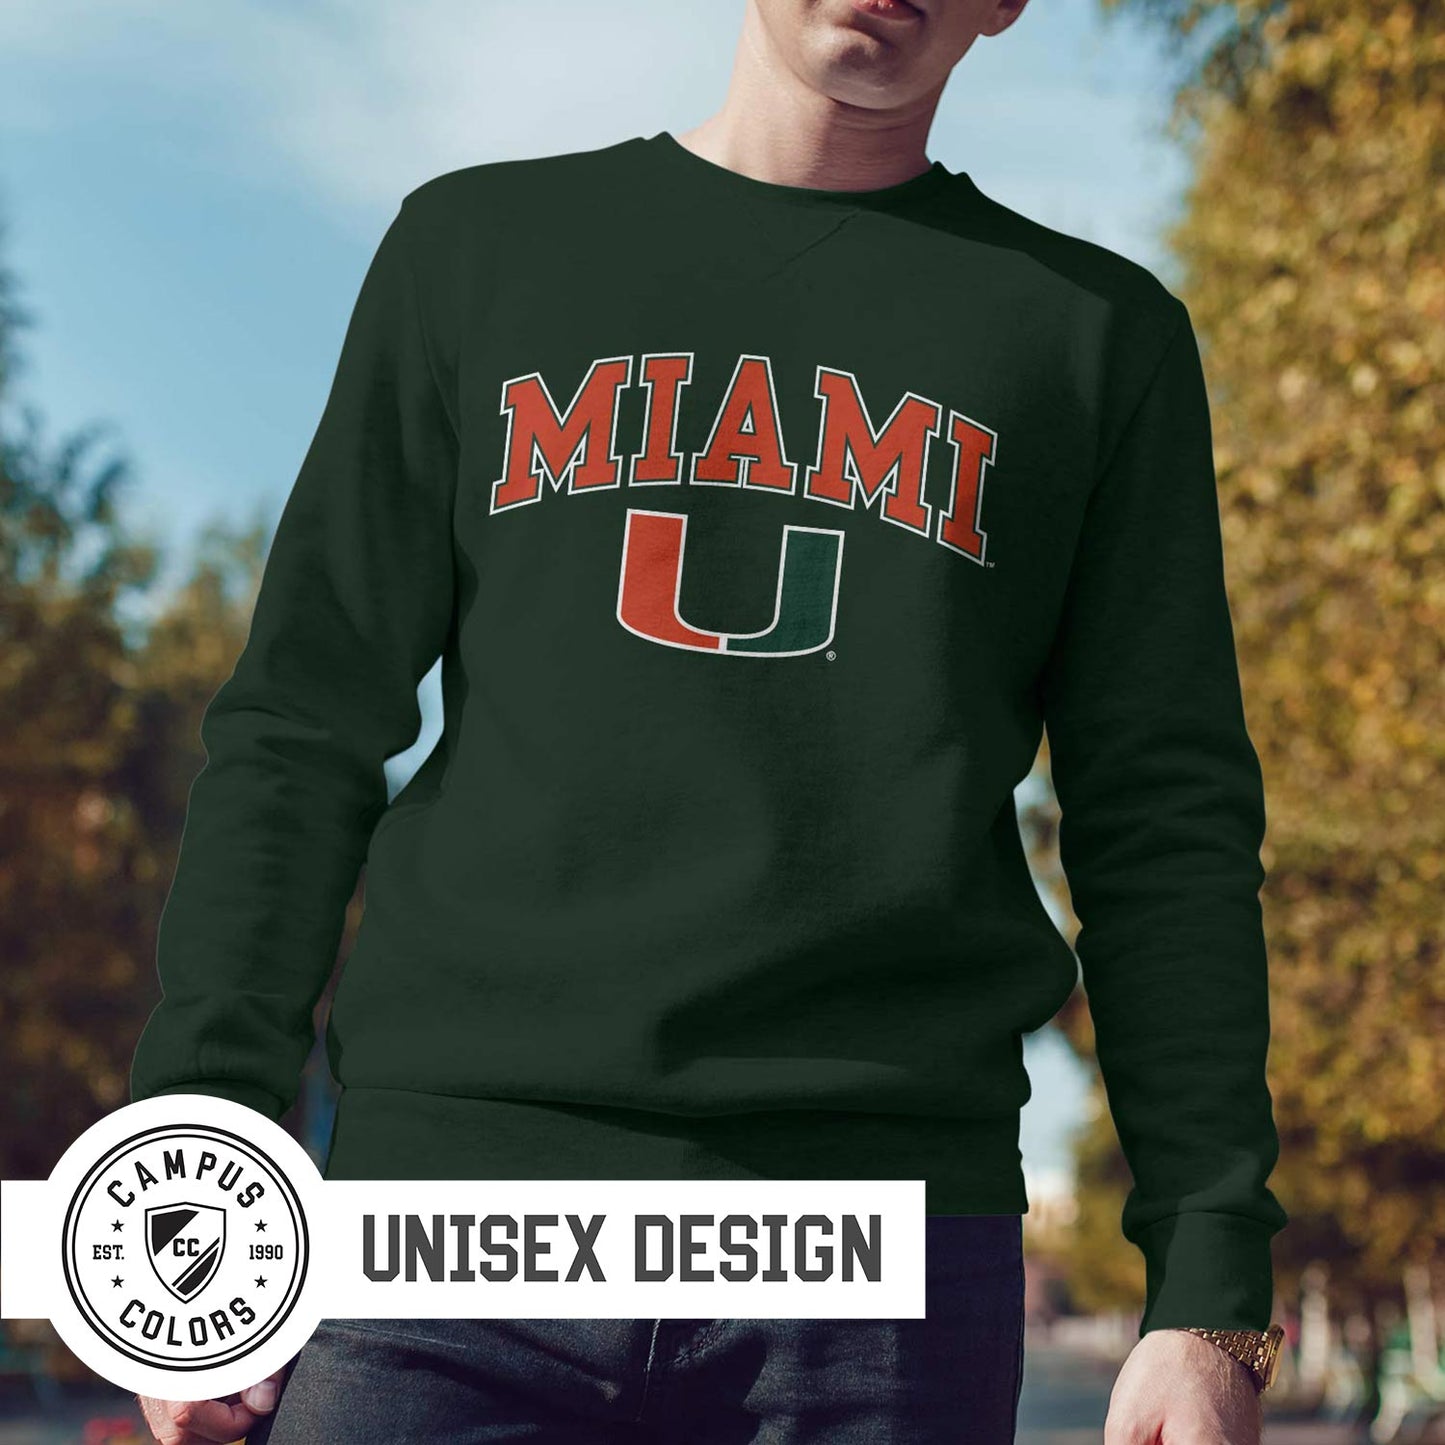 Miami Hurricanes Adult Arch & Logo Soft Style Gameday Crewneck Sweatshirt - Green